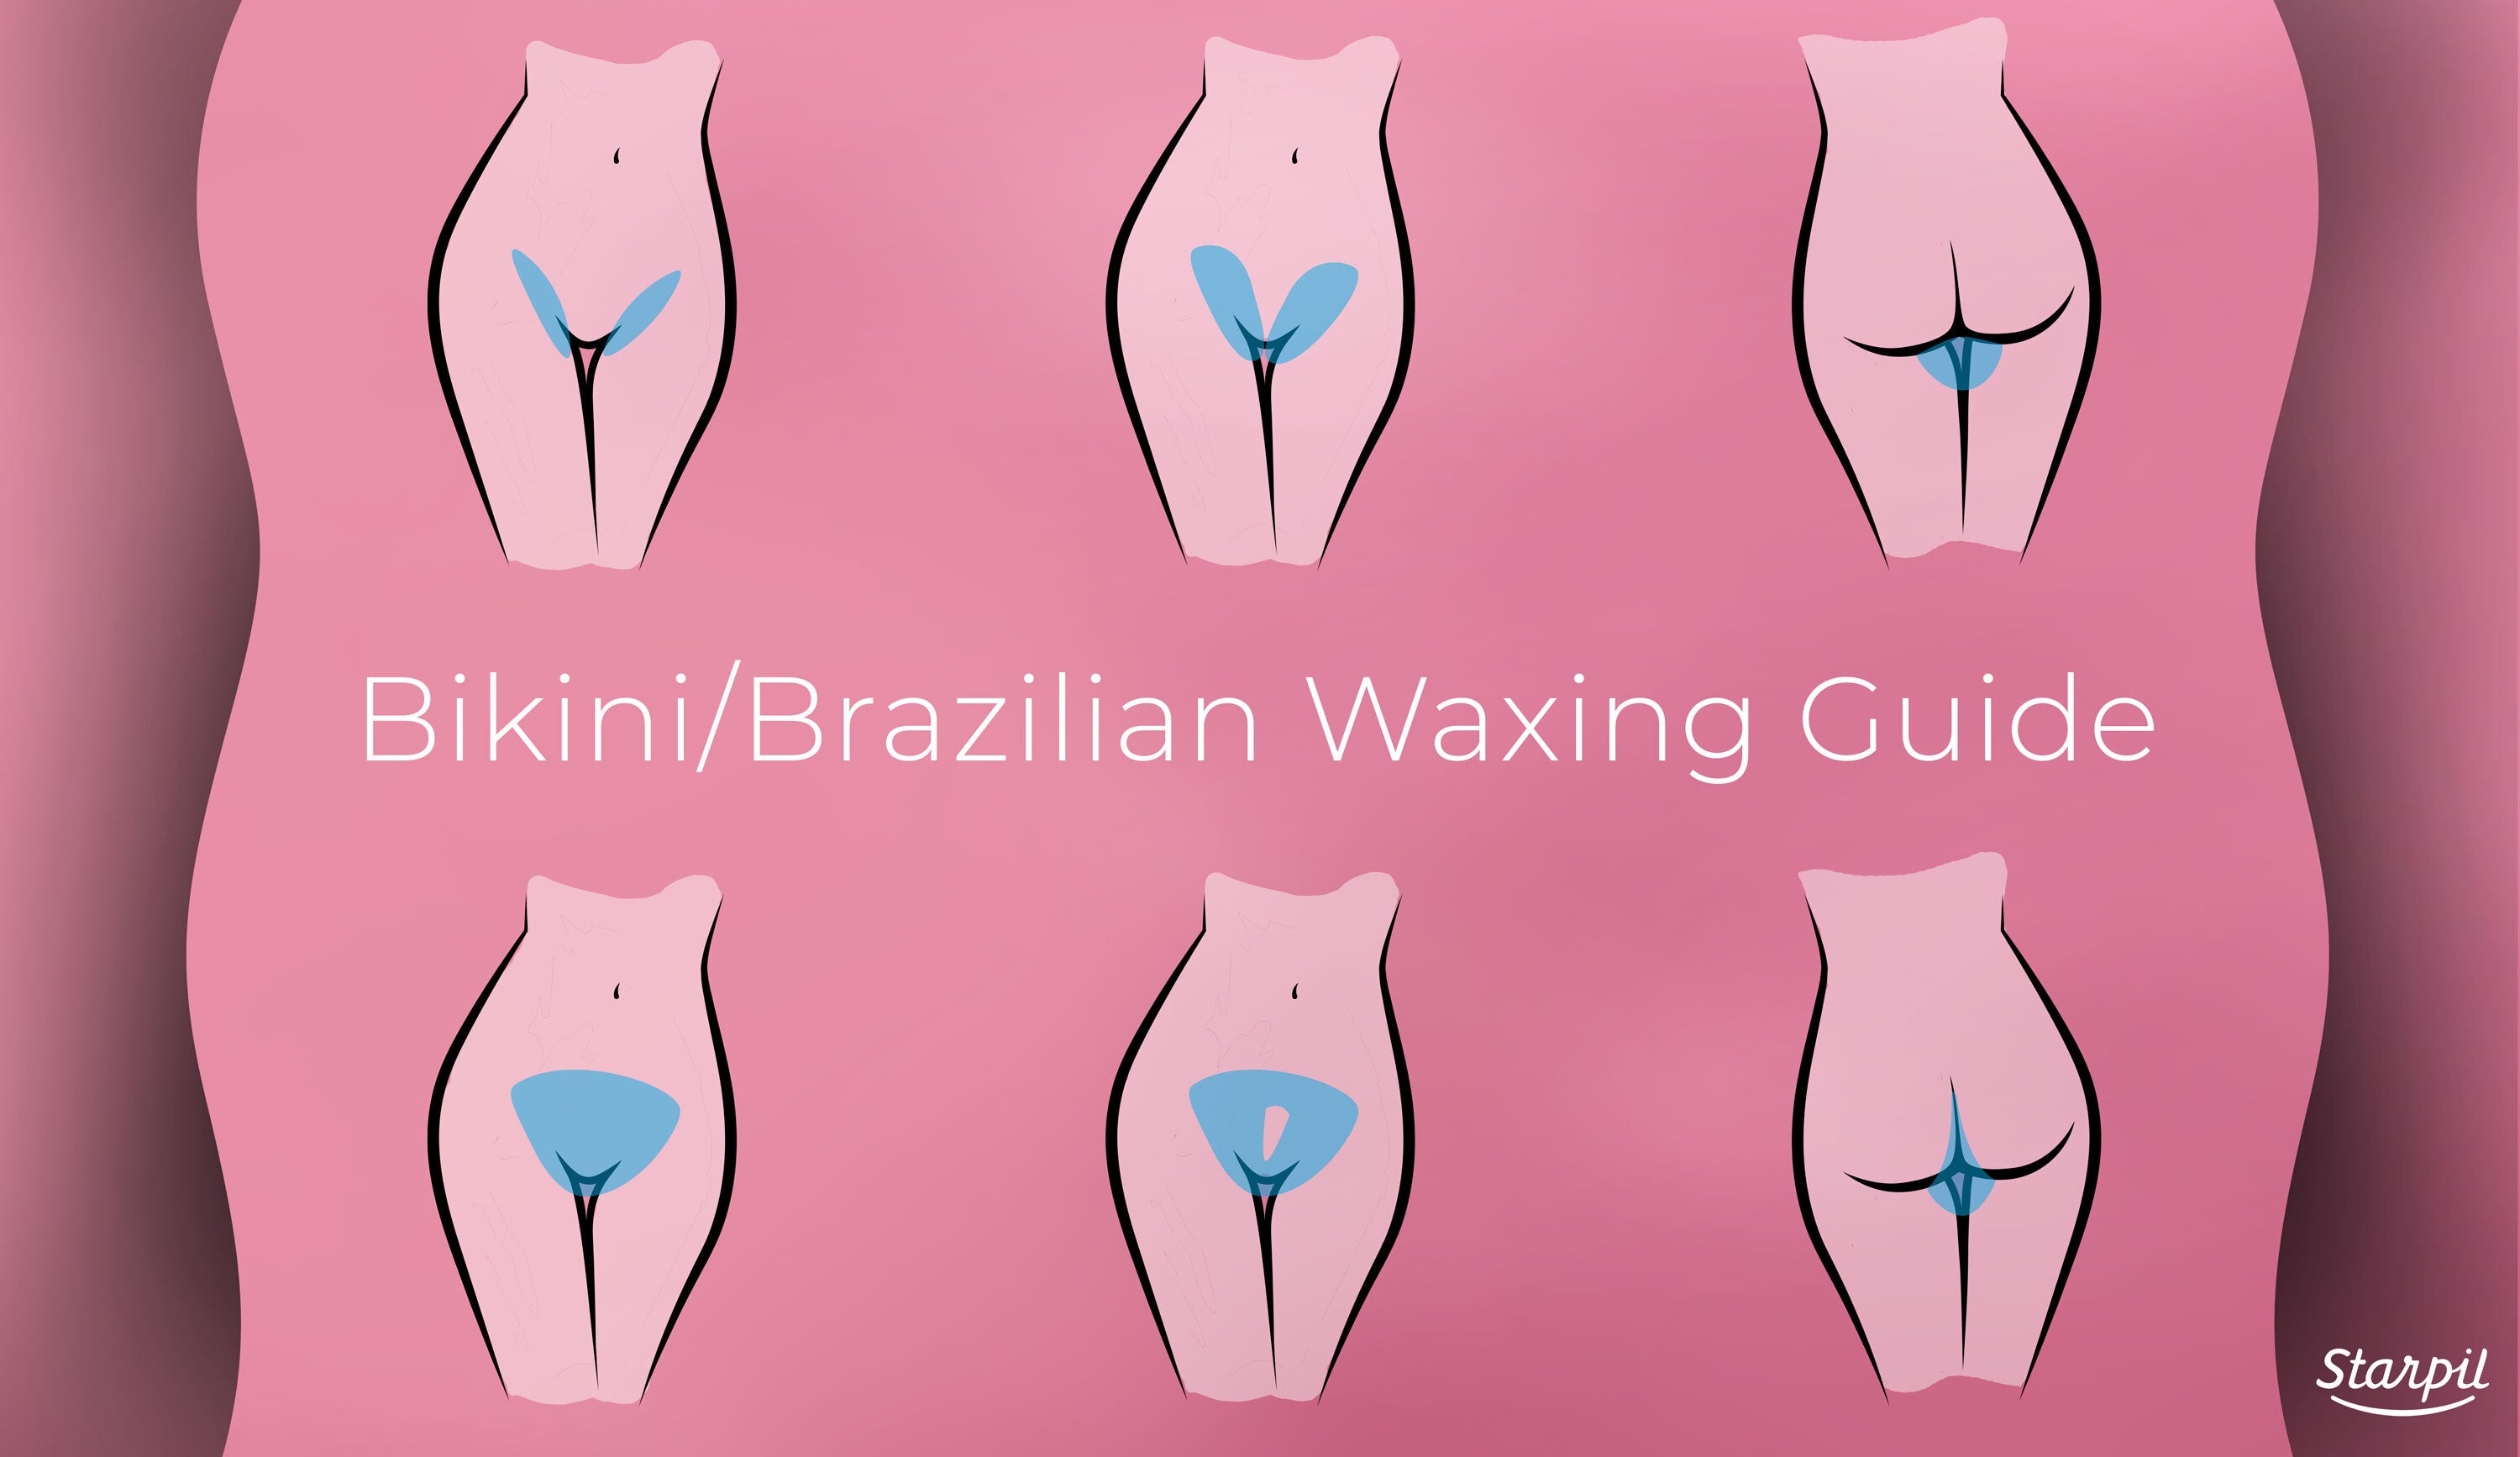 david ian hughes share brazilian wax tutorial photos